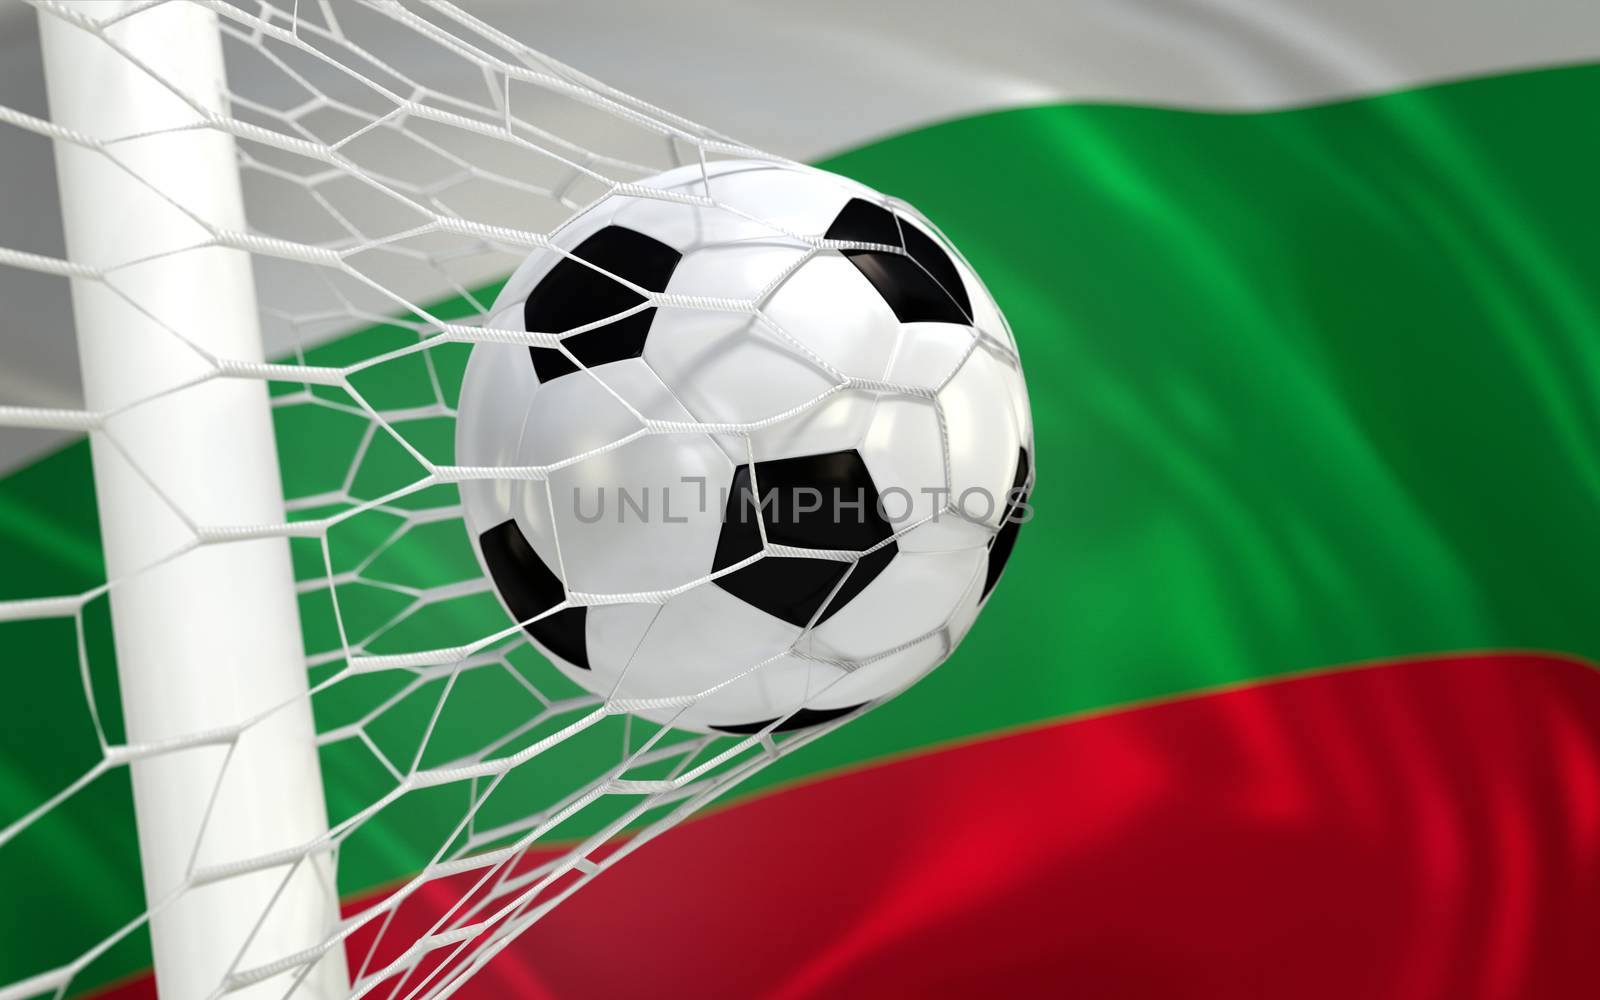 Bulgaria waving flag and soccer ball in goal net by Barbraford